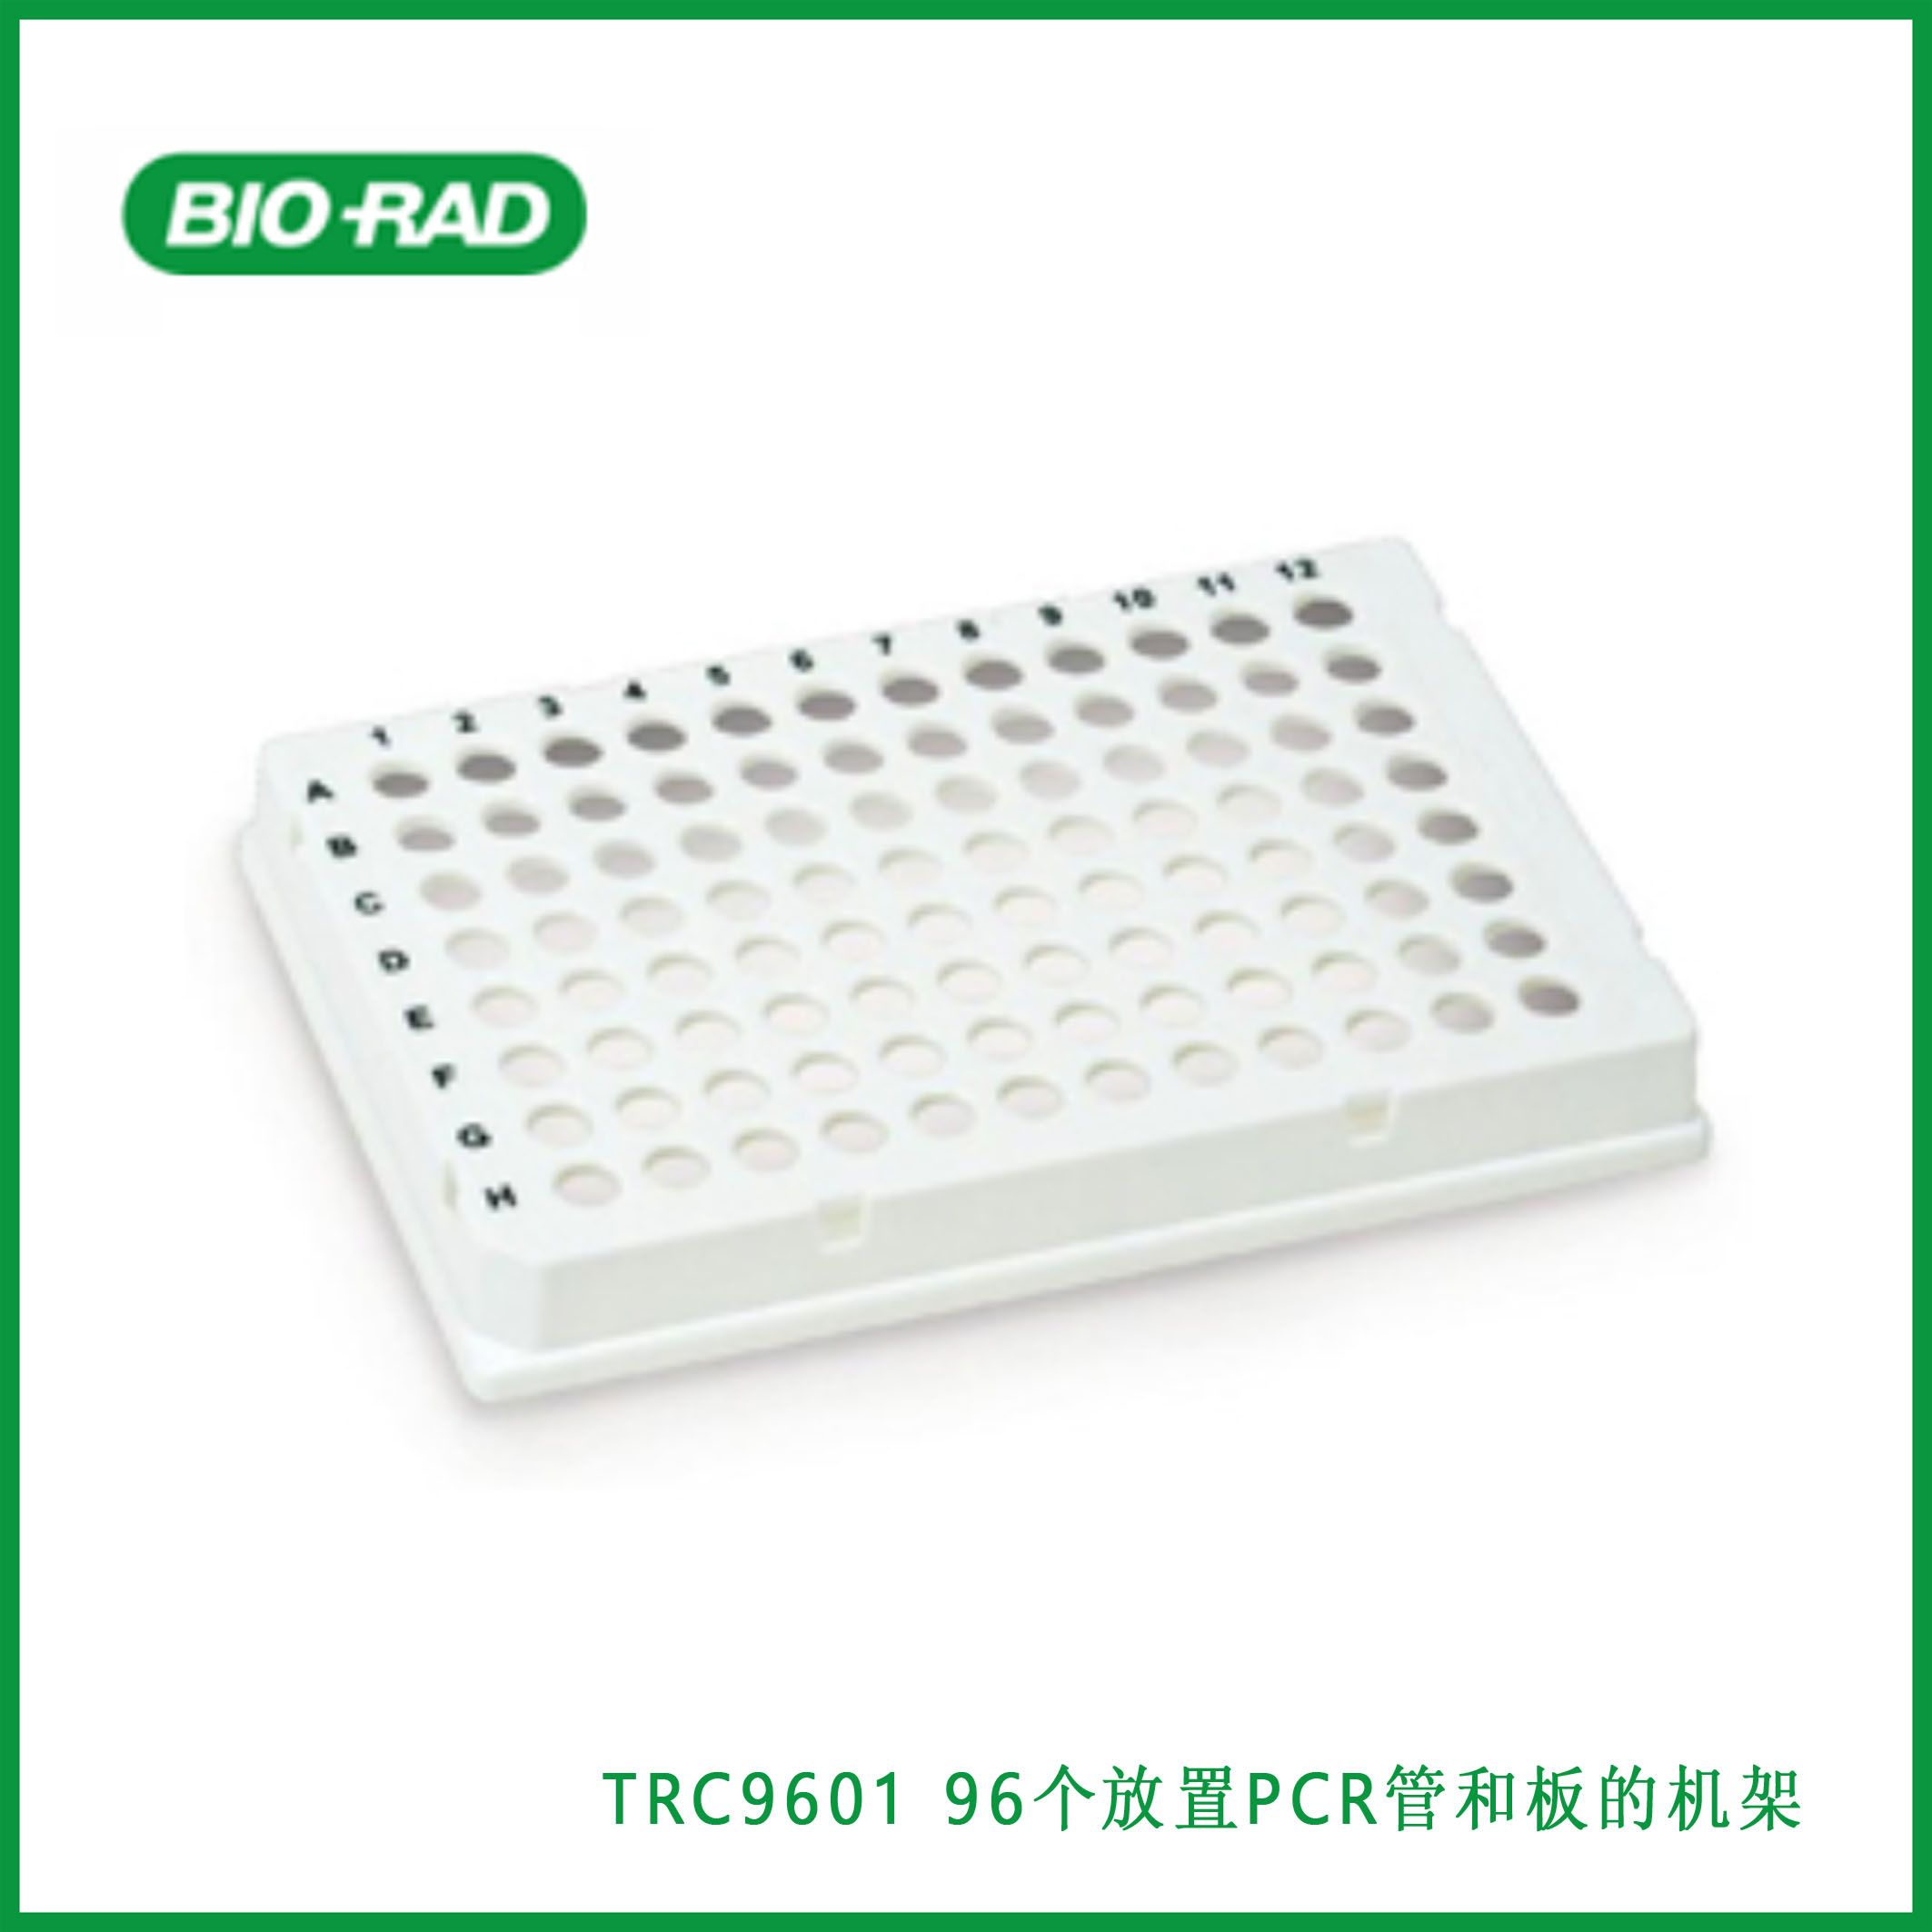 伯乐Bio-RadTRC9601 96-Place Racks for PCR Tubes and Plates, white, autoclavable, 96个放置PCR管和板的机架，白色，可高压灭菌，现货